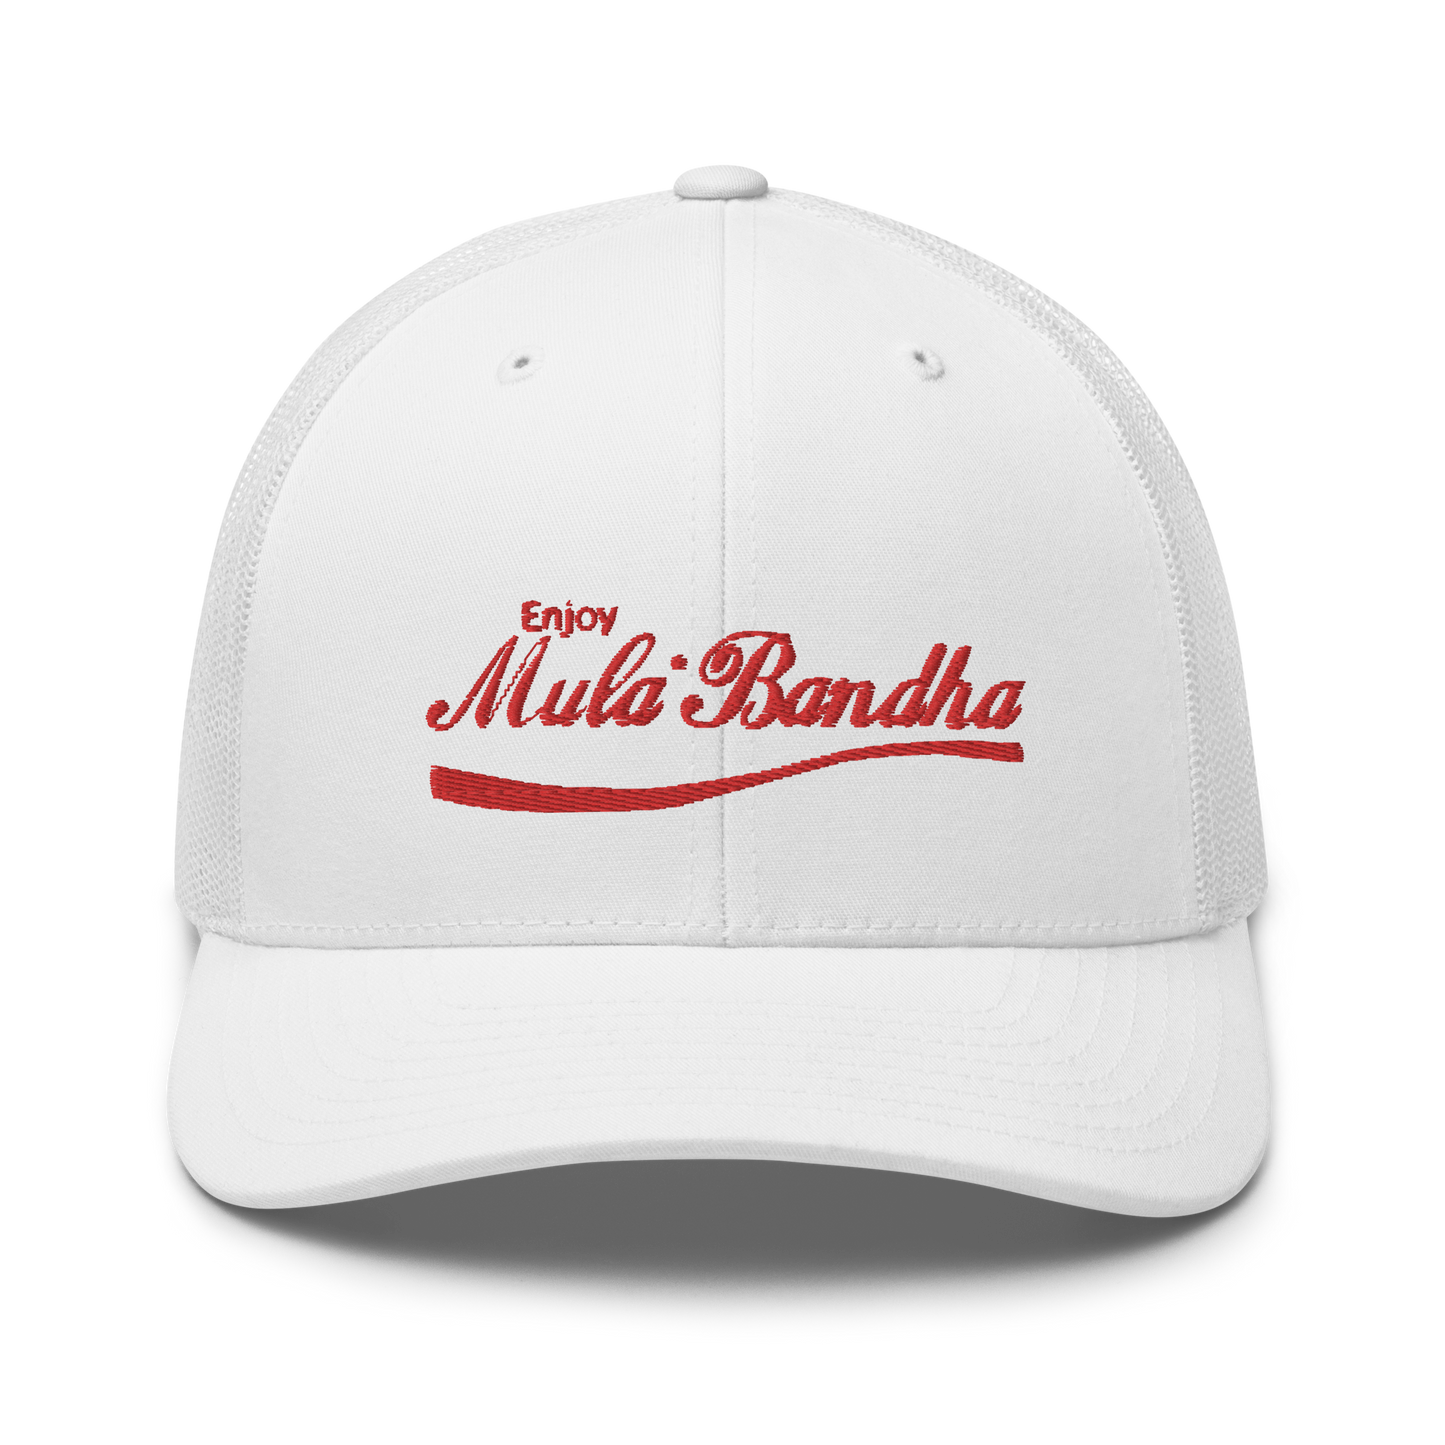 Enjoy Mula Bandha Trucker Hat